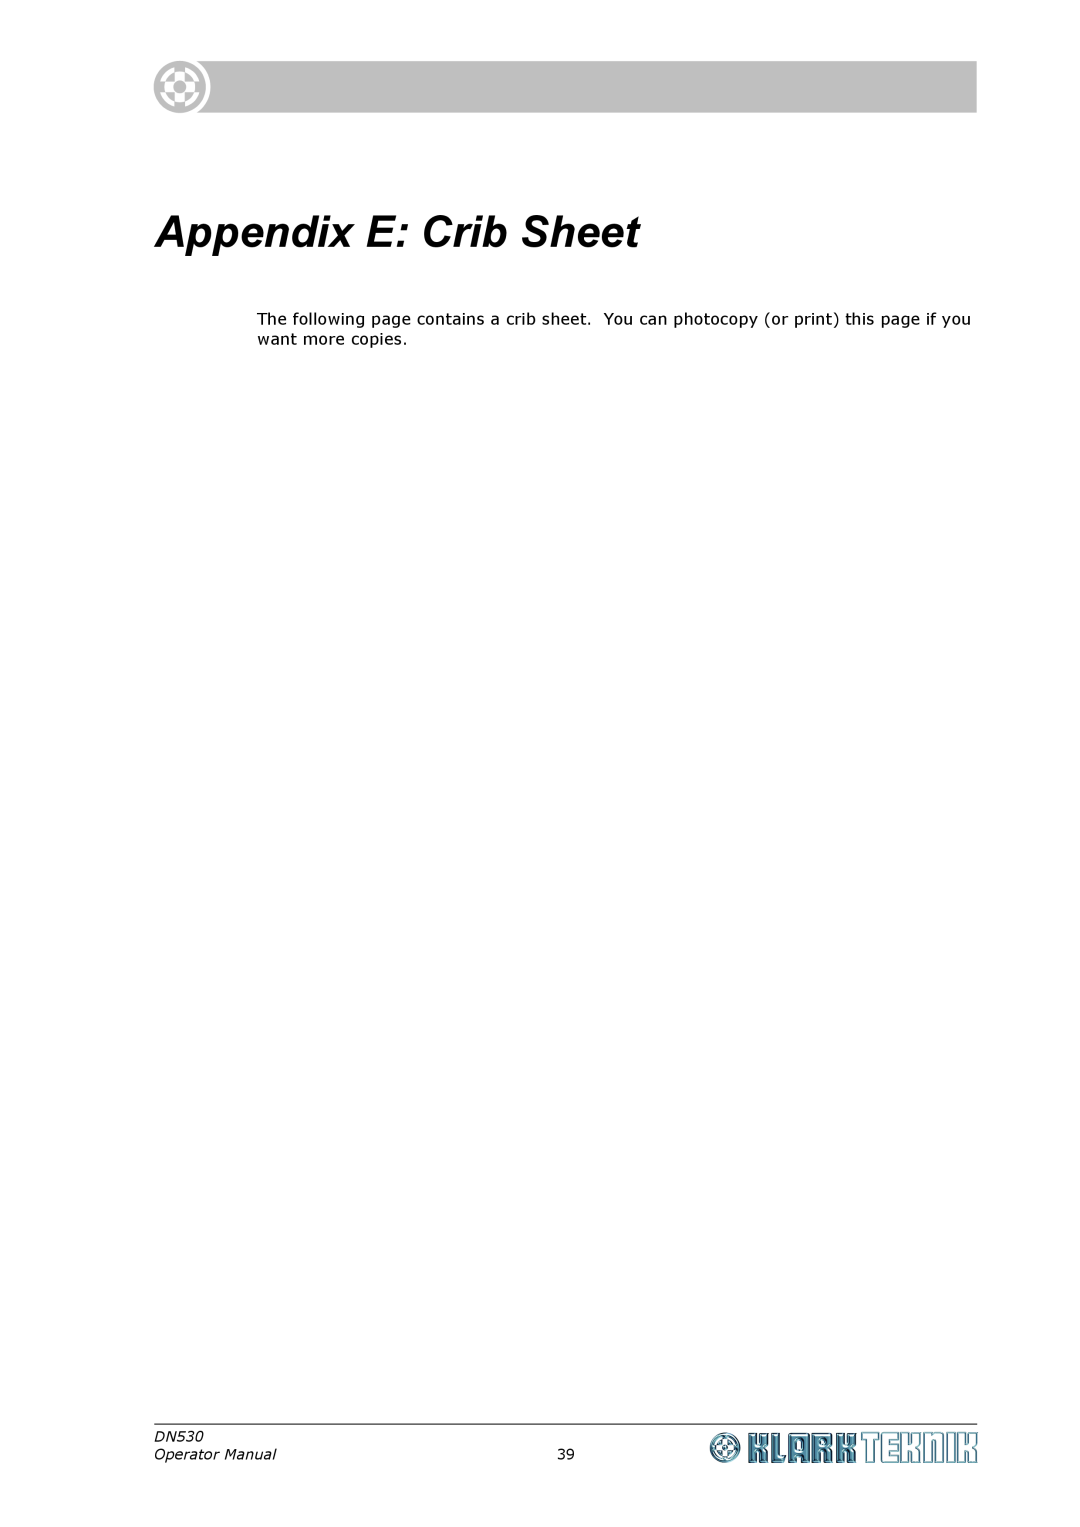 Klark Teknik DN530 specifications Appendix E Crib Sheet, Operator Manual 